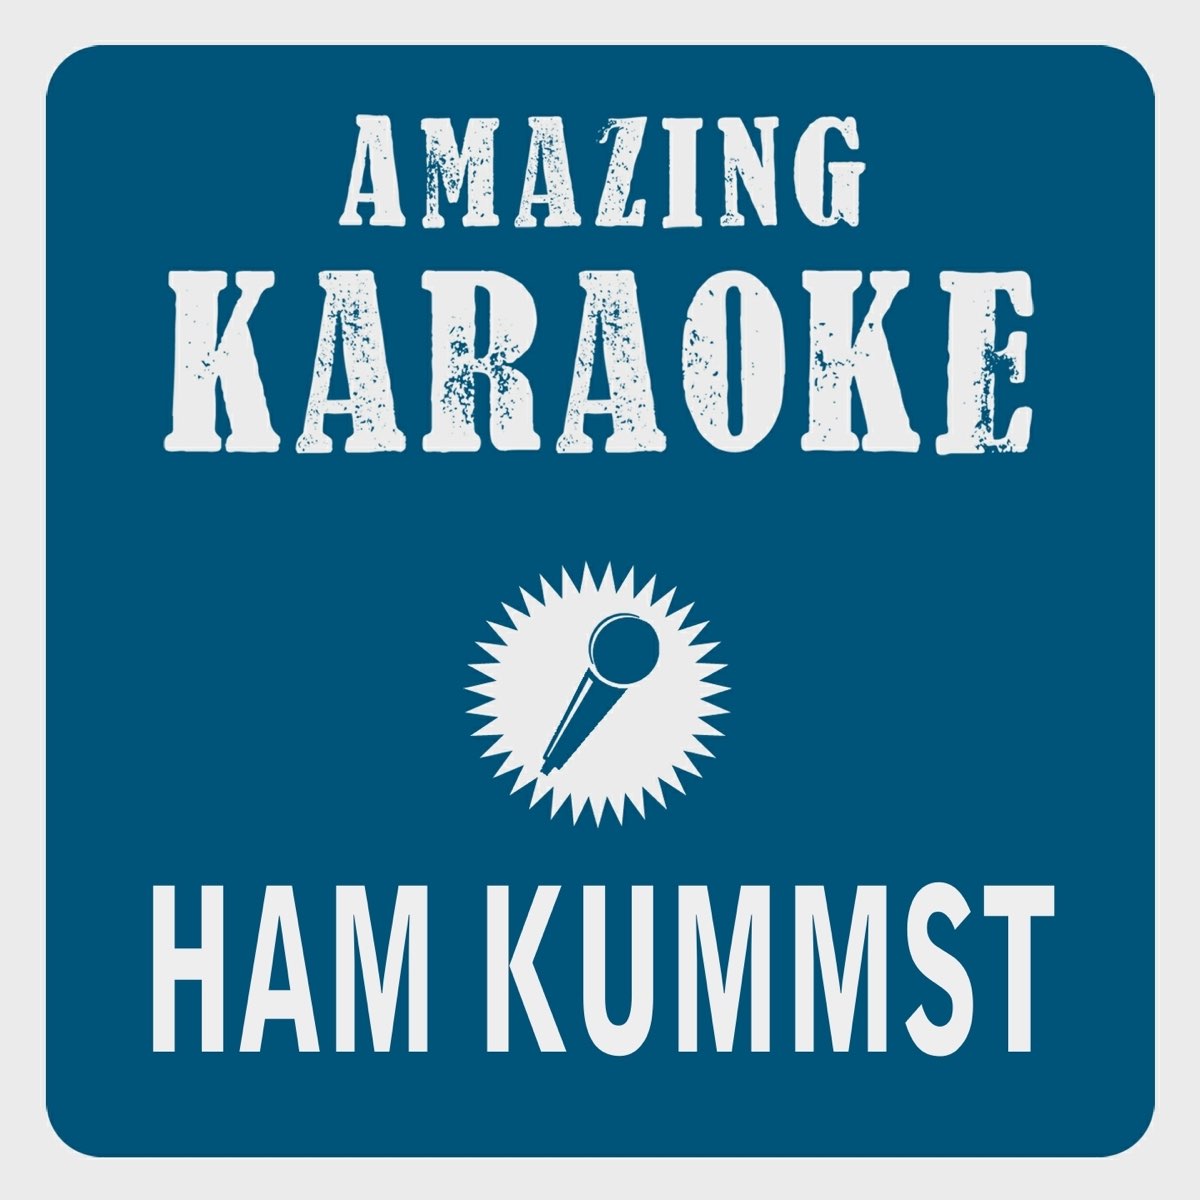 Ham kummst (Karaoke Version) [Originally Performed By Seiler und Speer] -  Single by Clara Oaks on Apple Music